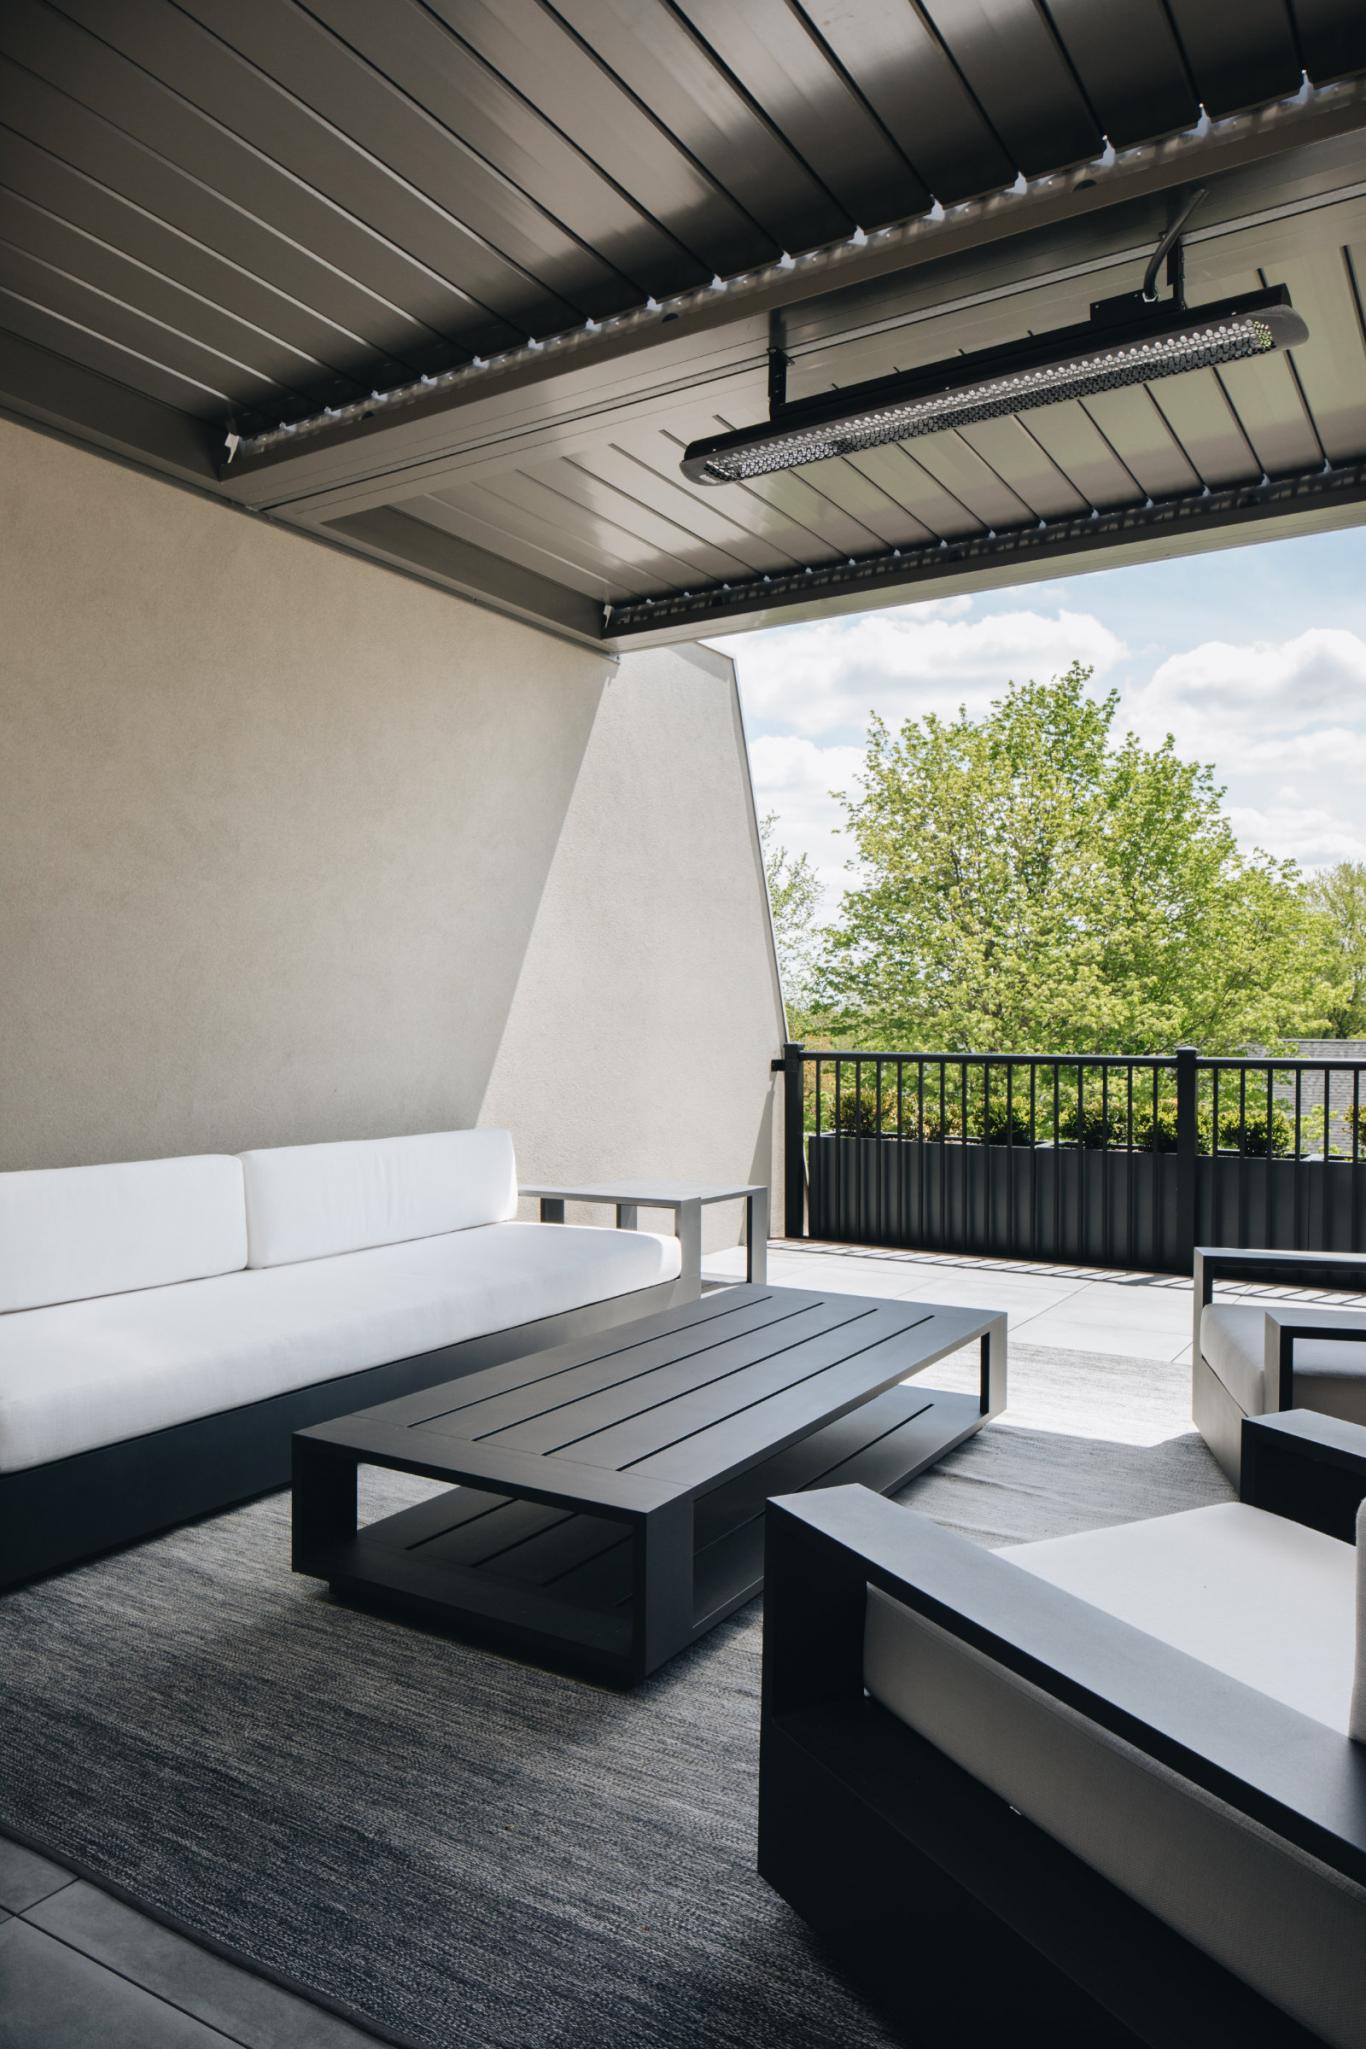 Rooftop Deck - Modern Glam Rooftop Deck